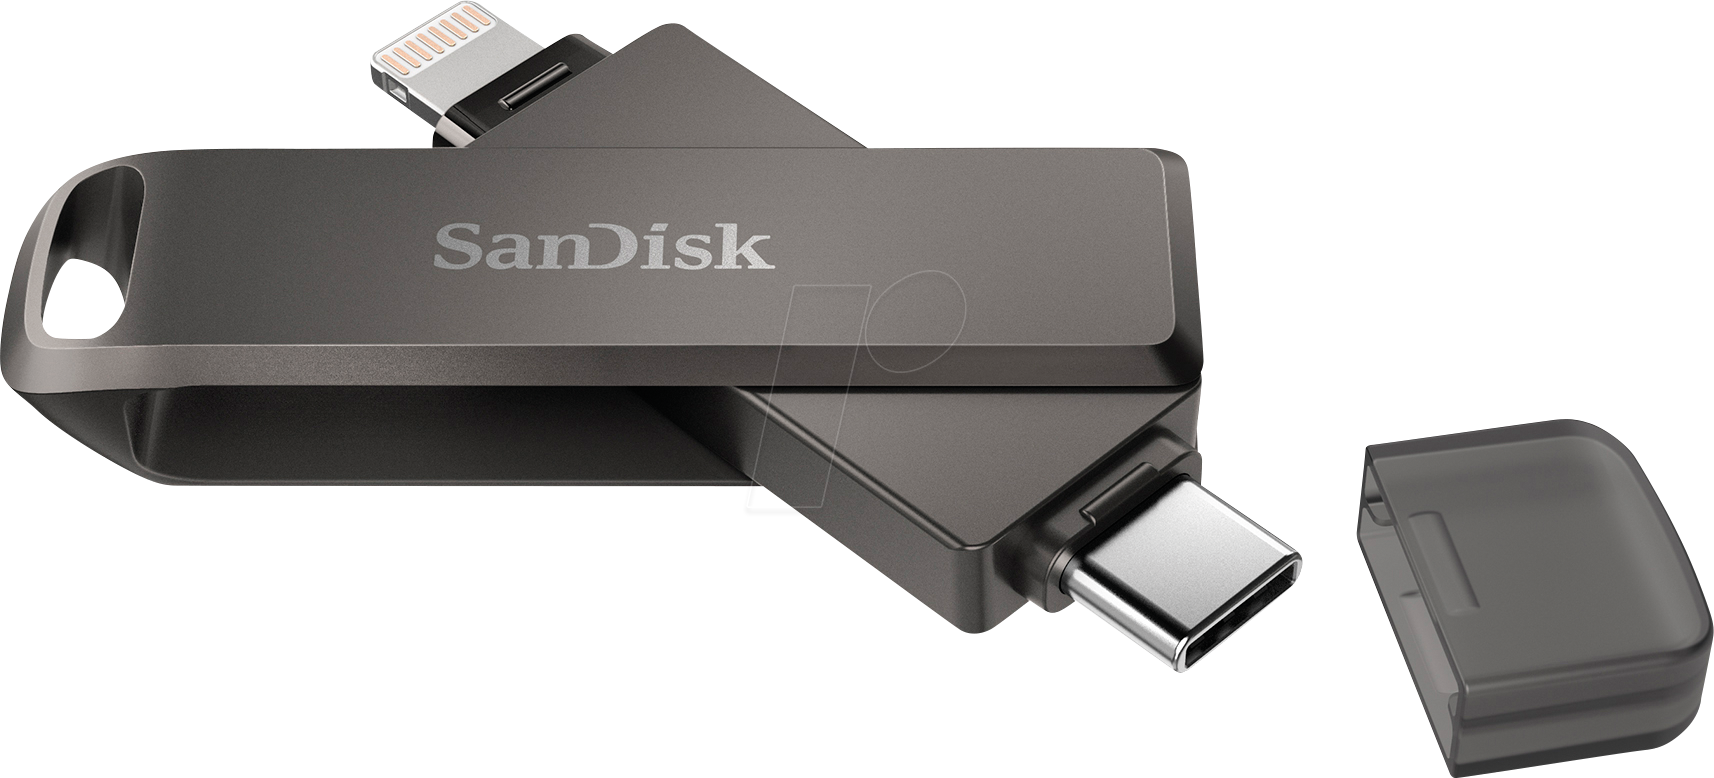 SDIX70N256GGN6NE - USB-Stick, USB 3.0, 256 GB, iXpand Luxe, Lightning, USB-C